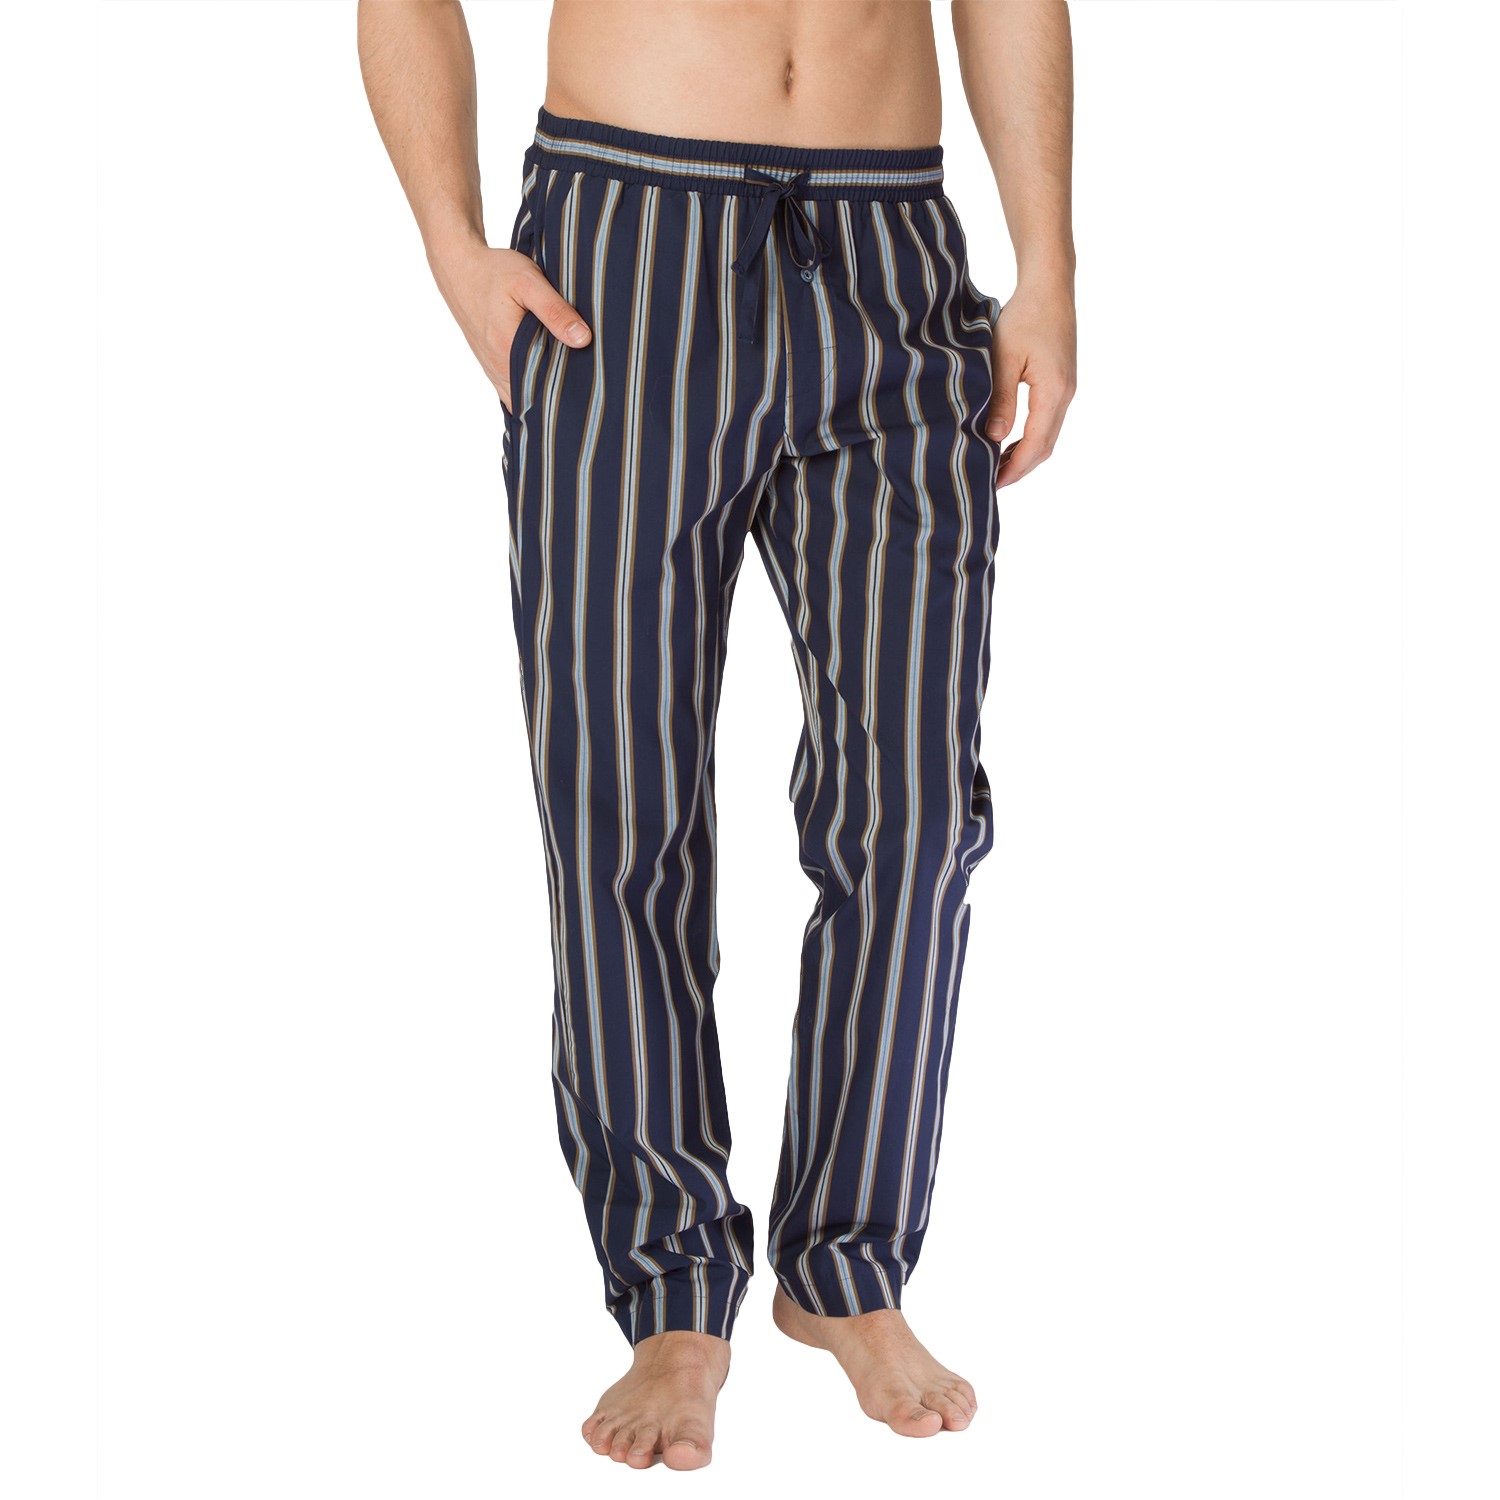 Calida Men Harry Pants - Pants - Loungewear - Underwear - Timarco.co.uk